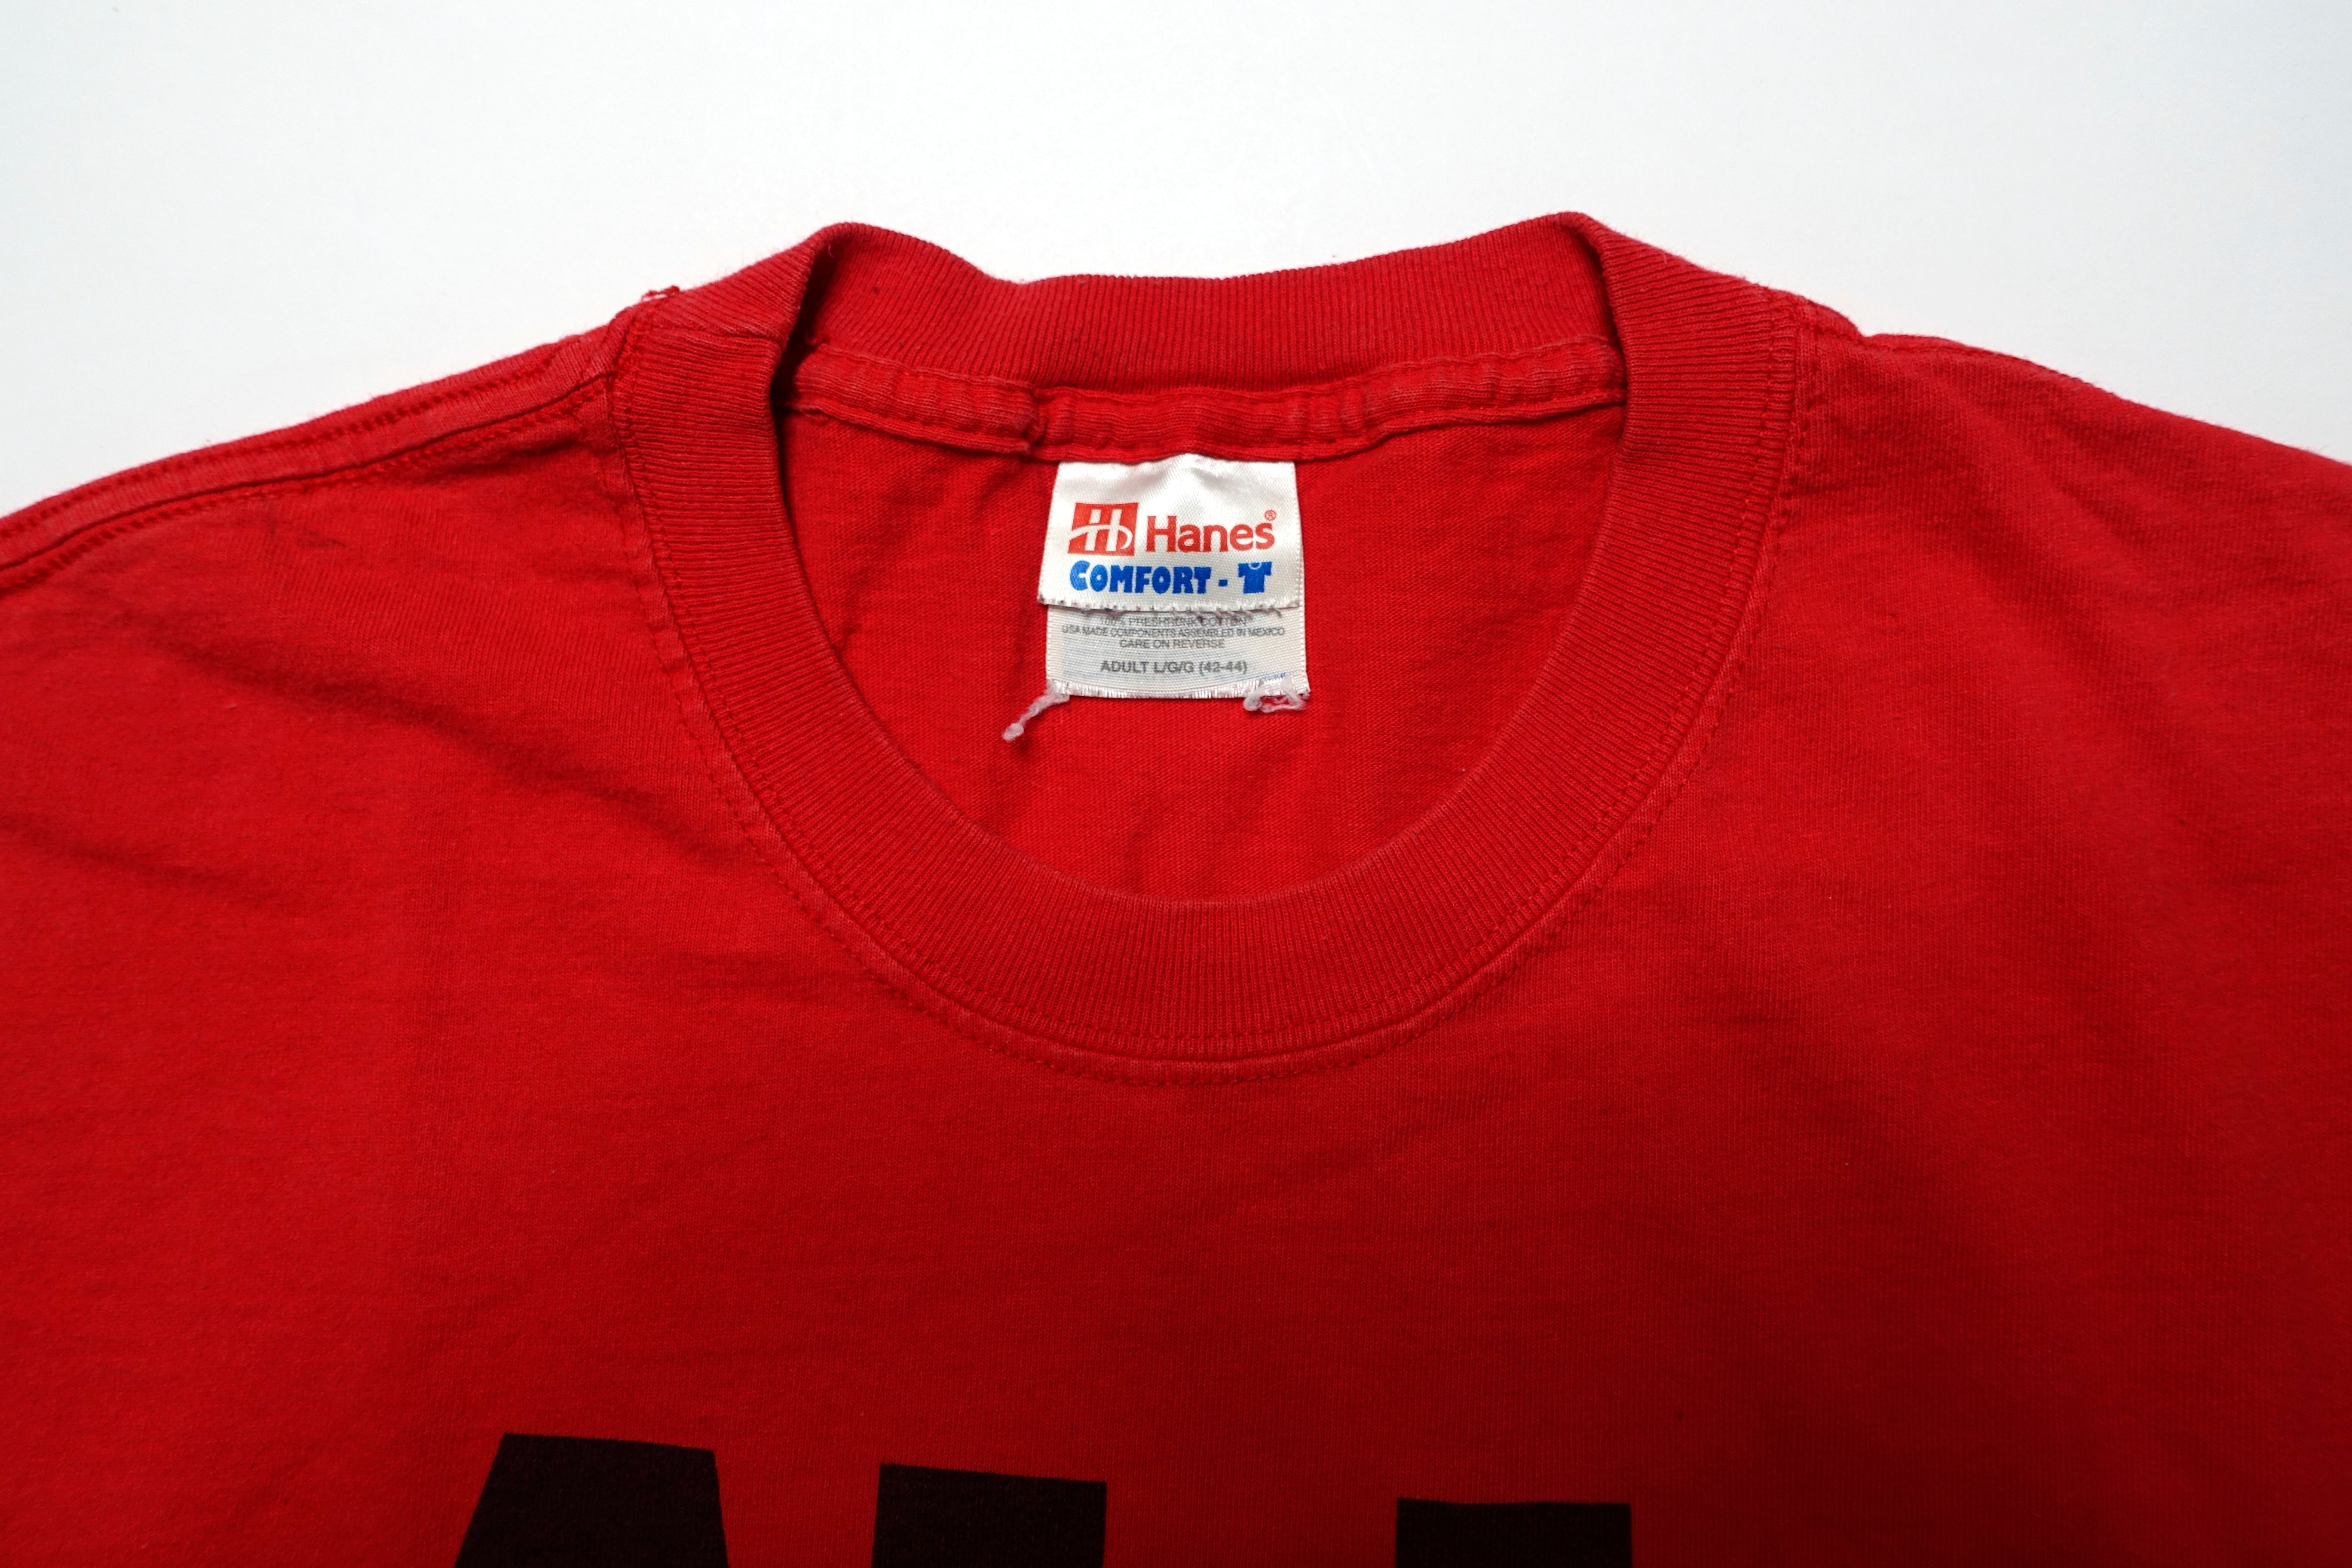 ALL - Allroy Sez... (Big Allroy) 1988 Tour Shirt (Hanes Comfort-T) Size Large